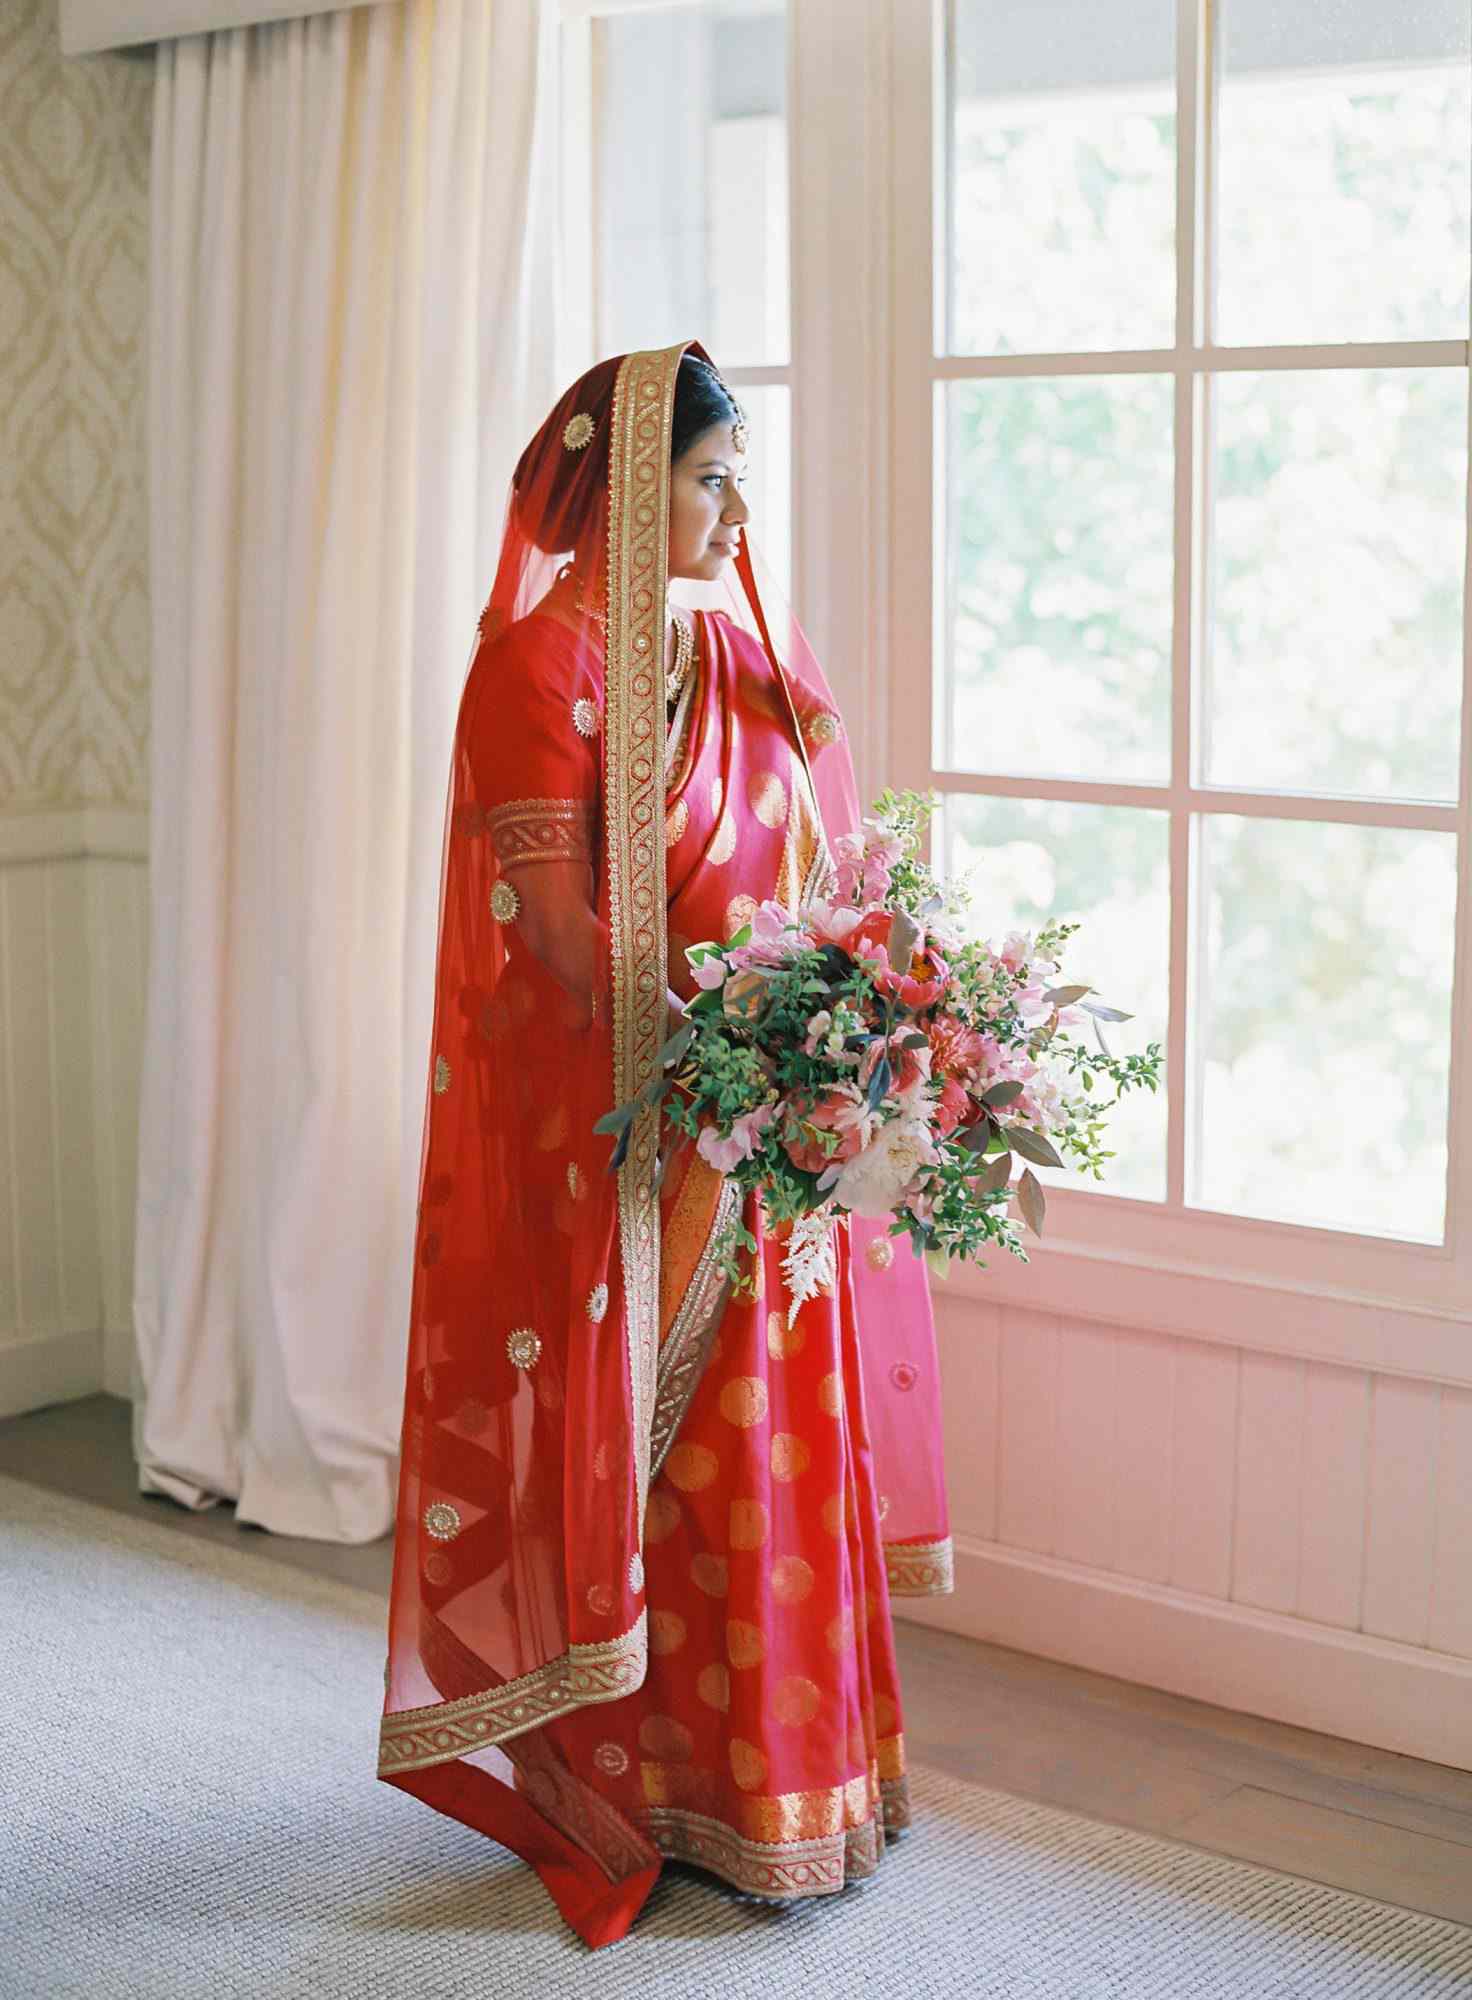 ronita ryan wedding bride gazing out of window in veil